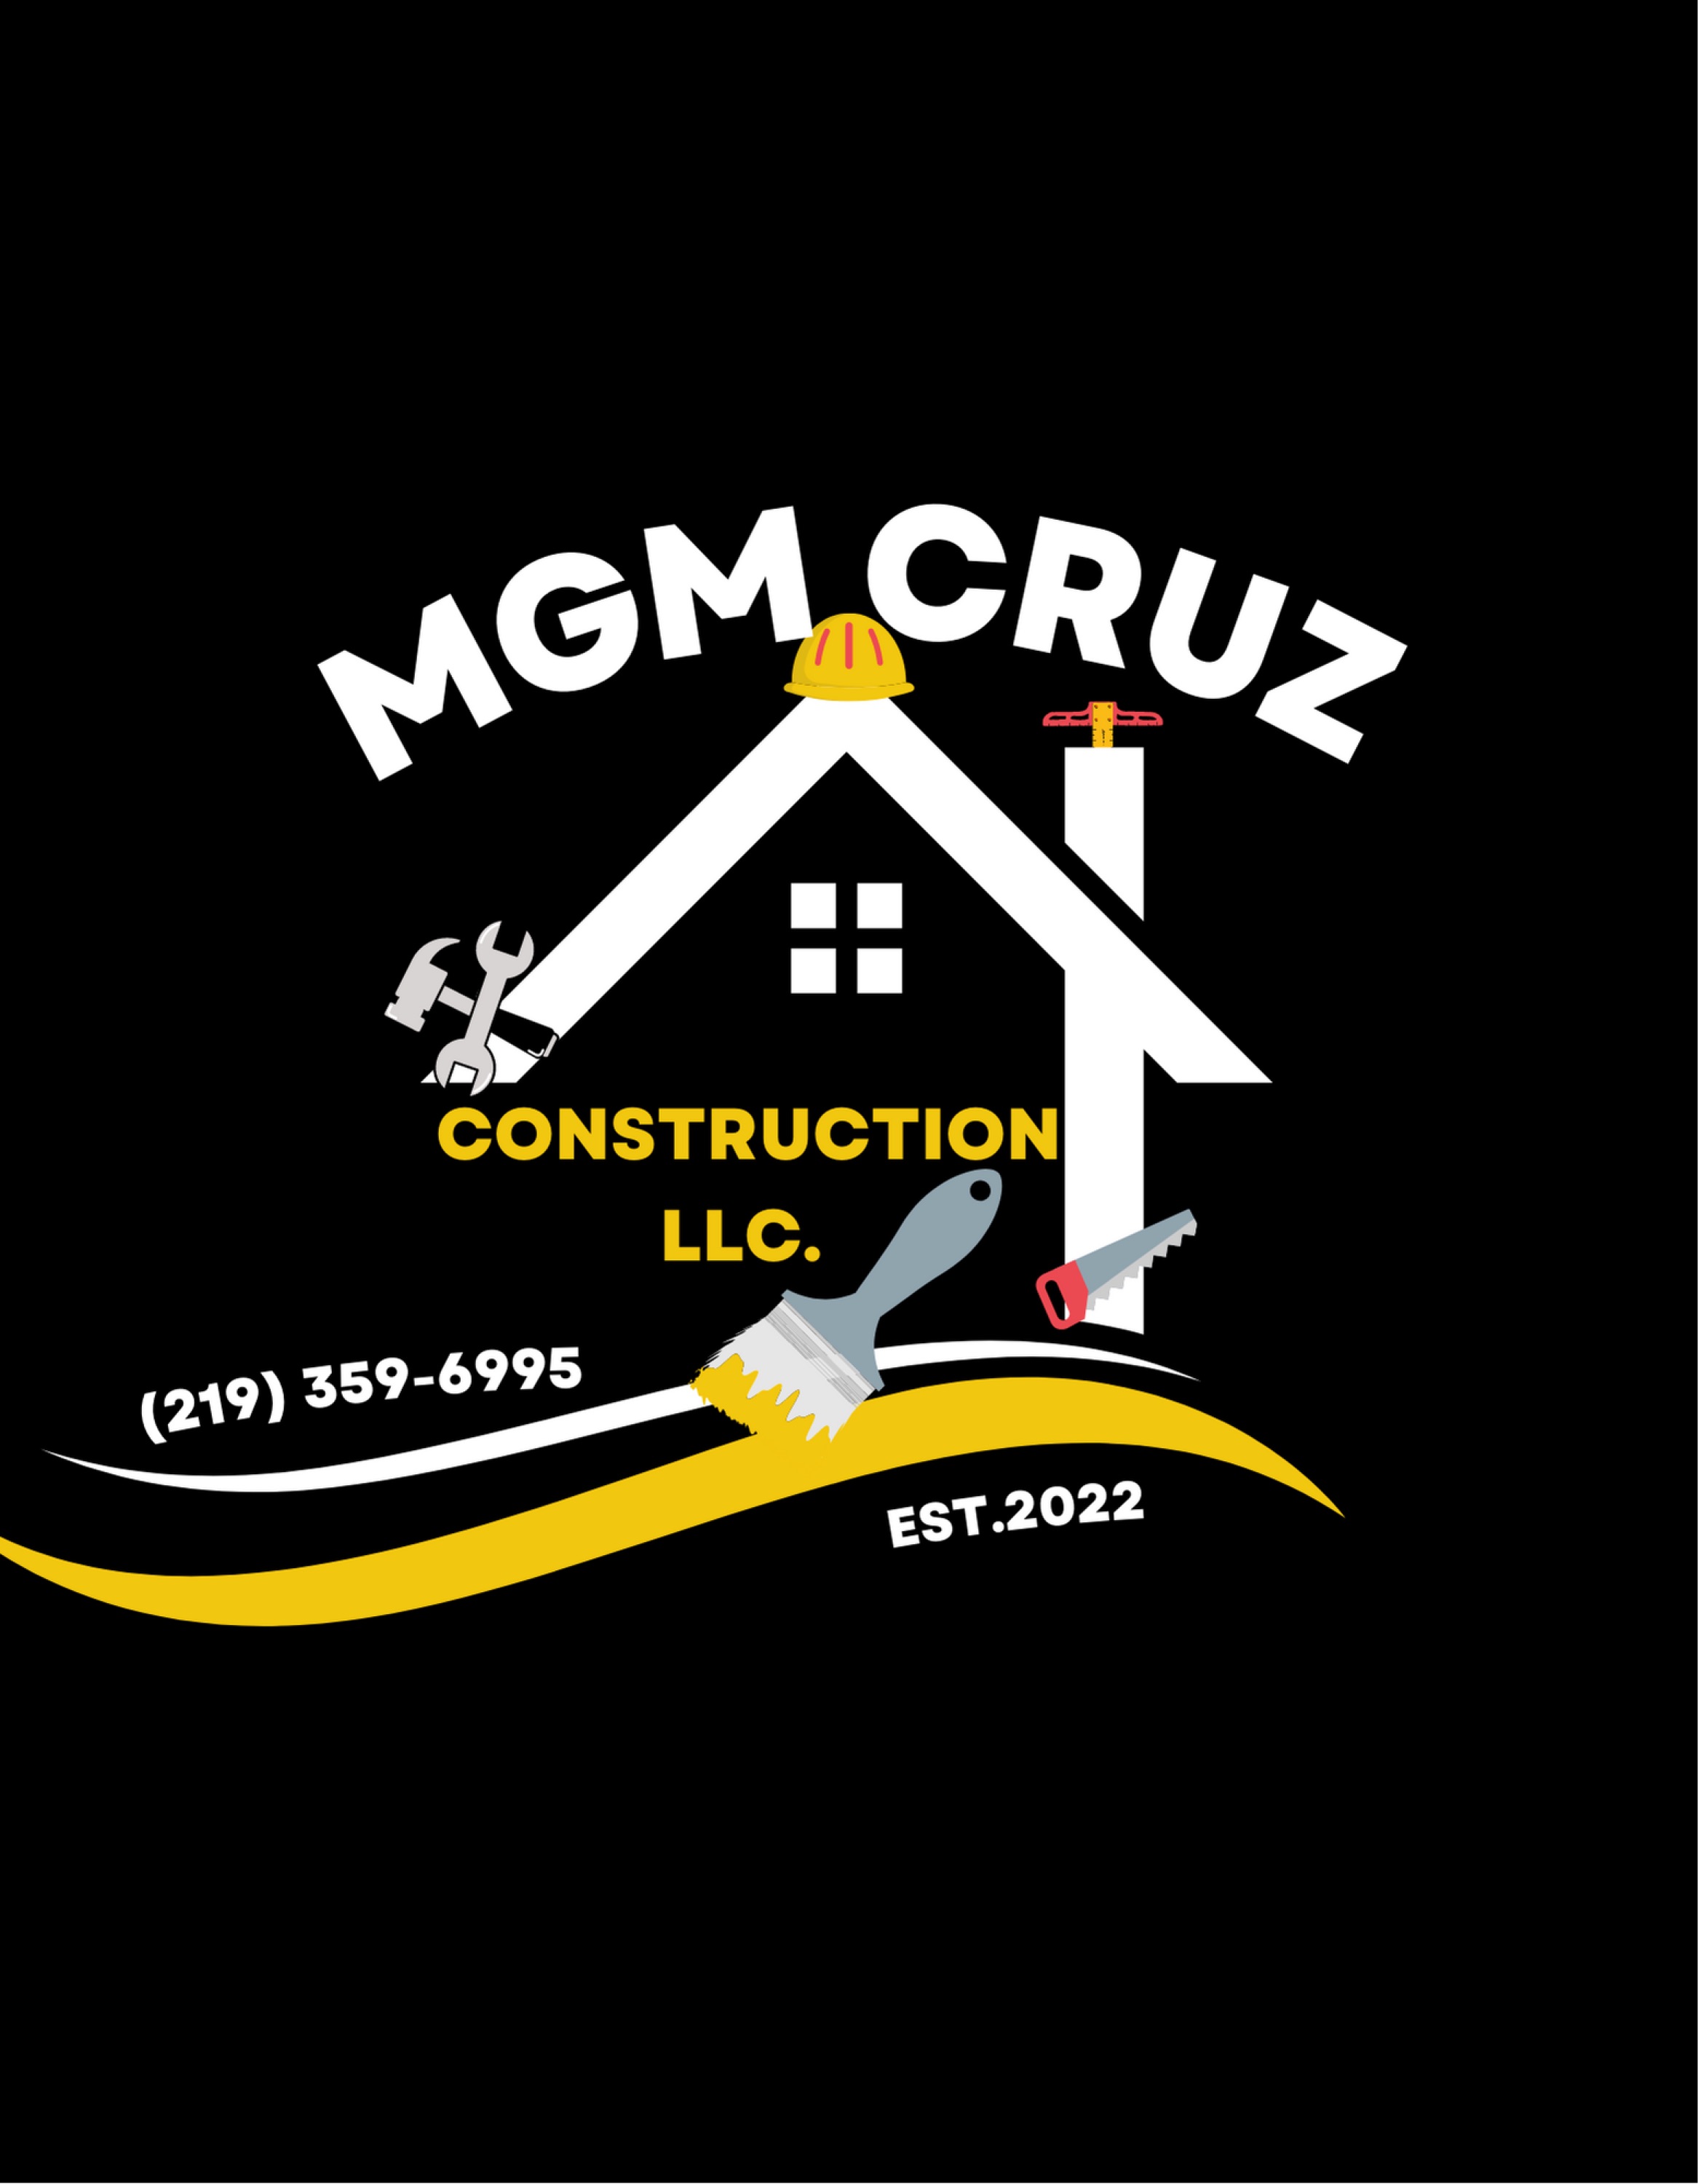 MGM Cruz Construction LLC Logo